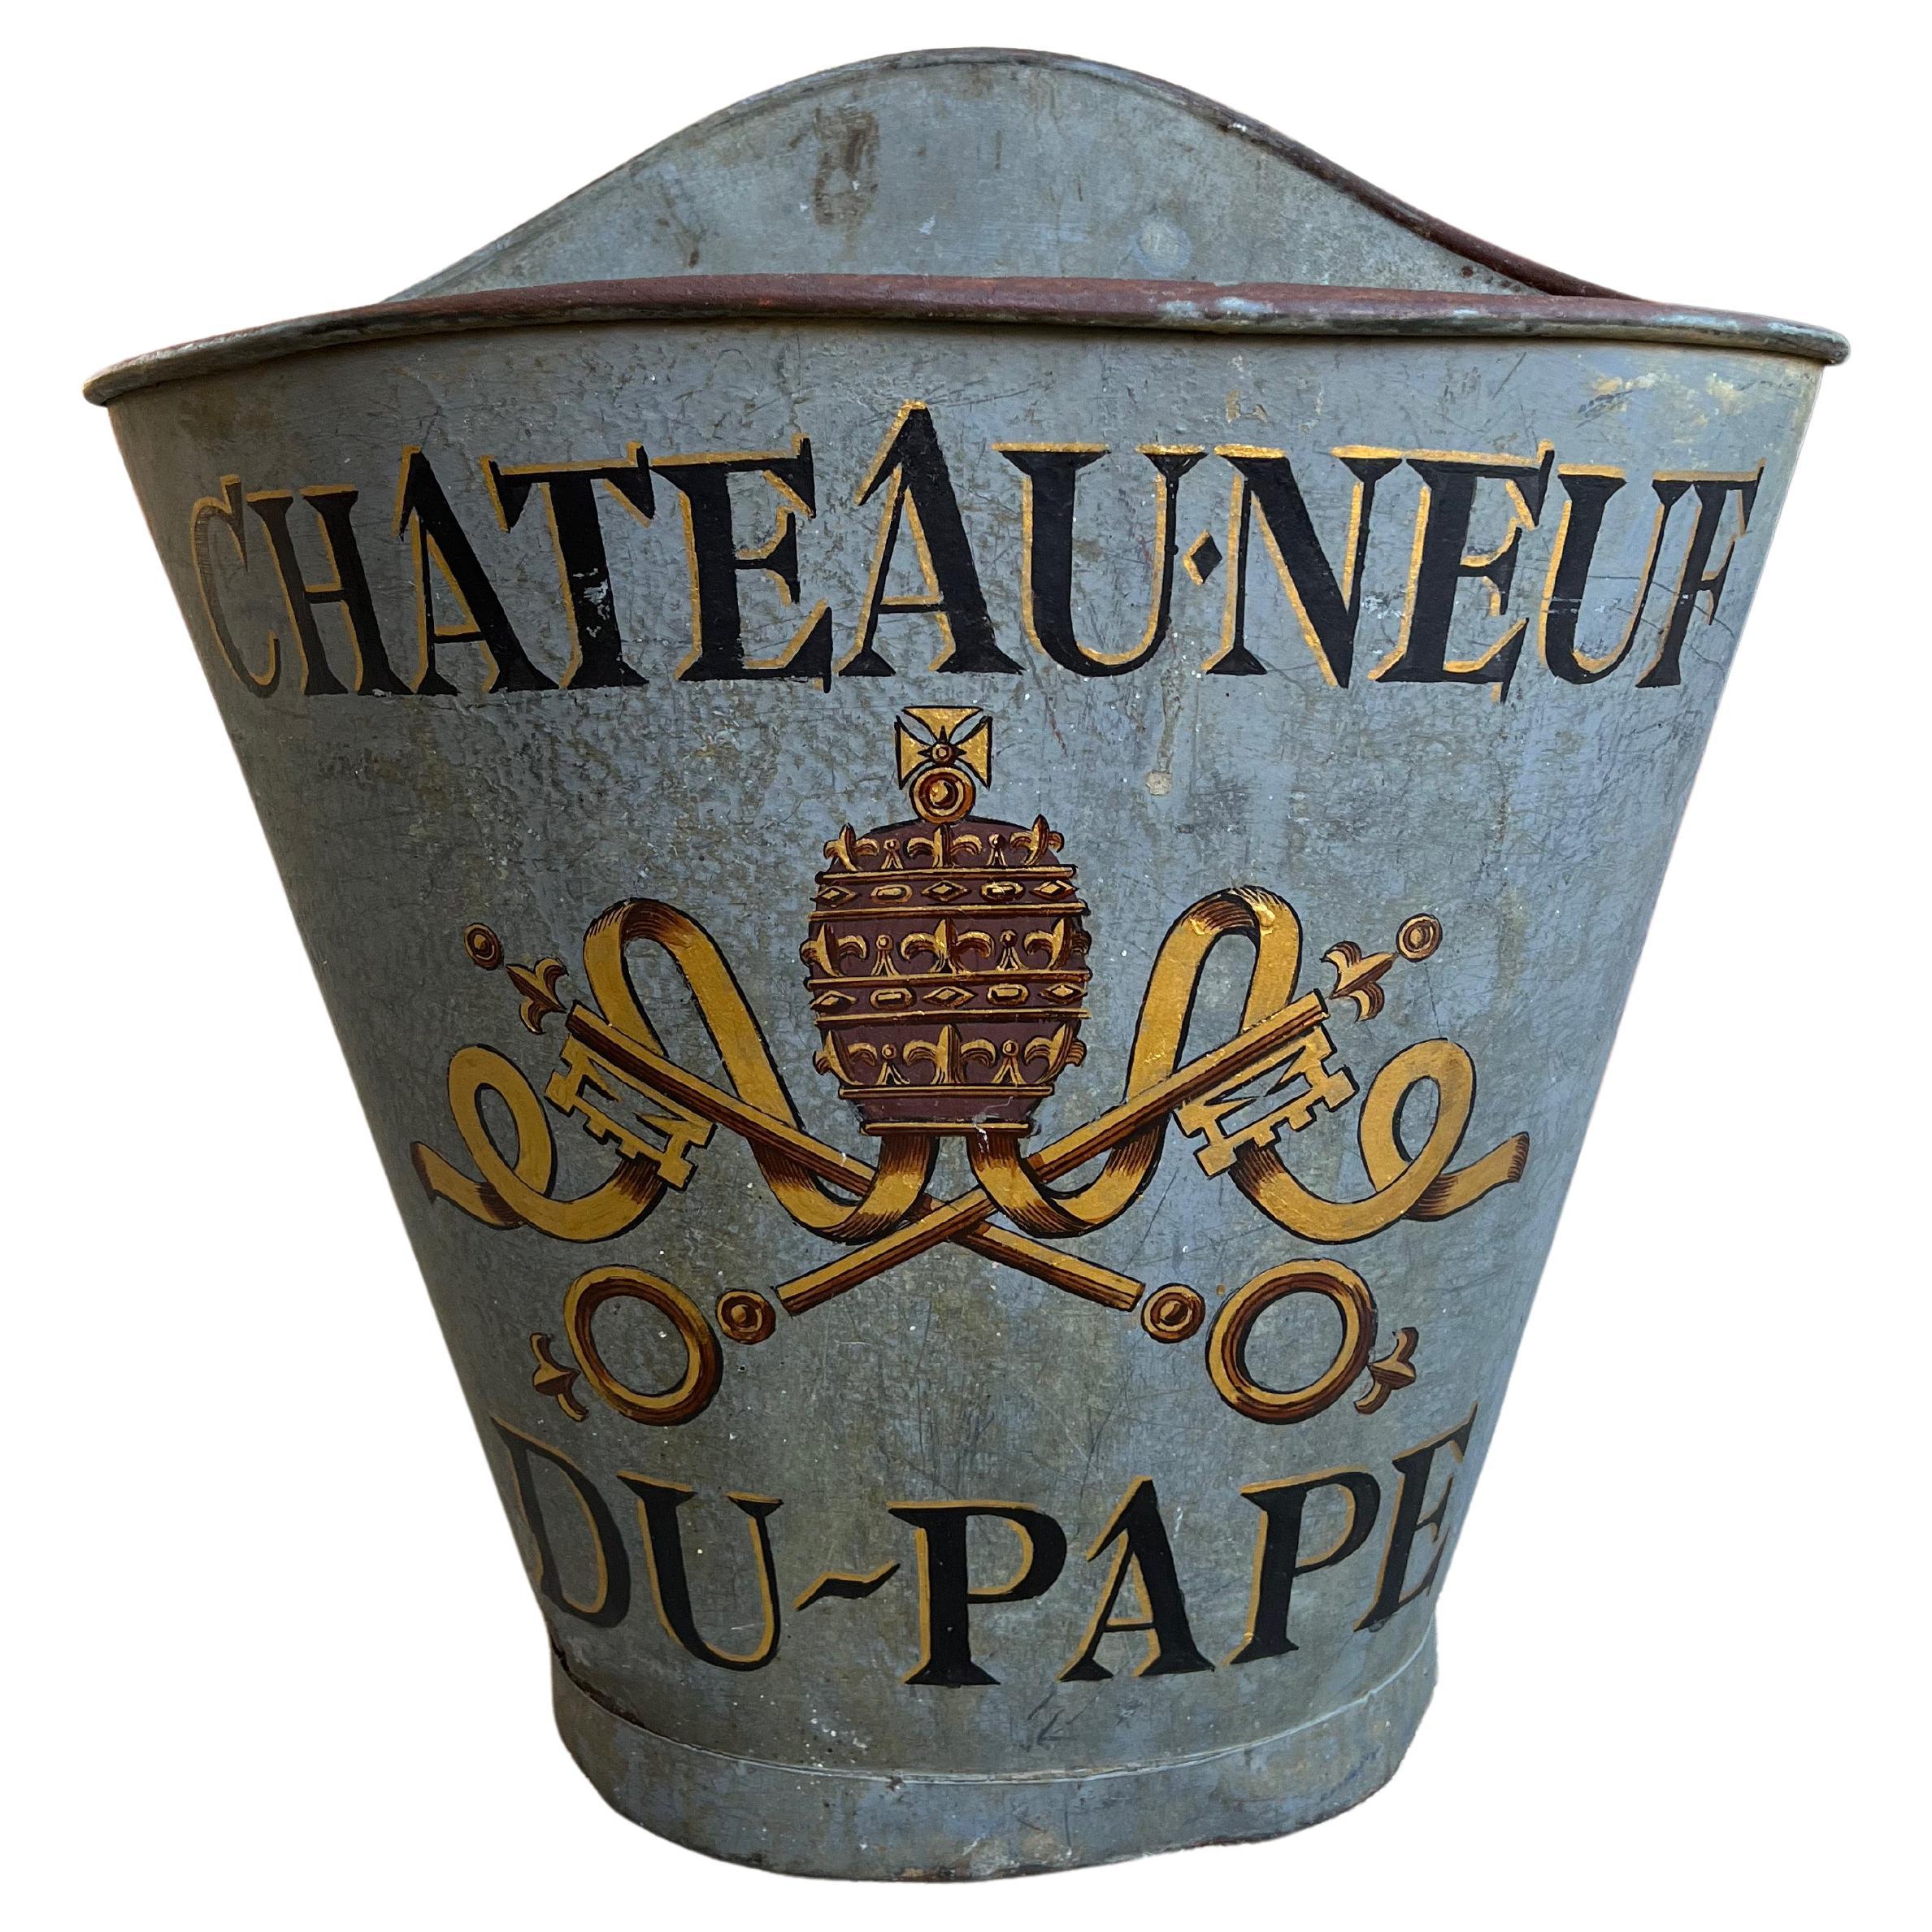 19th Century French Vineyard Grape Hod Hotte Bucket Wine Vineyard Tole Painted